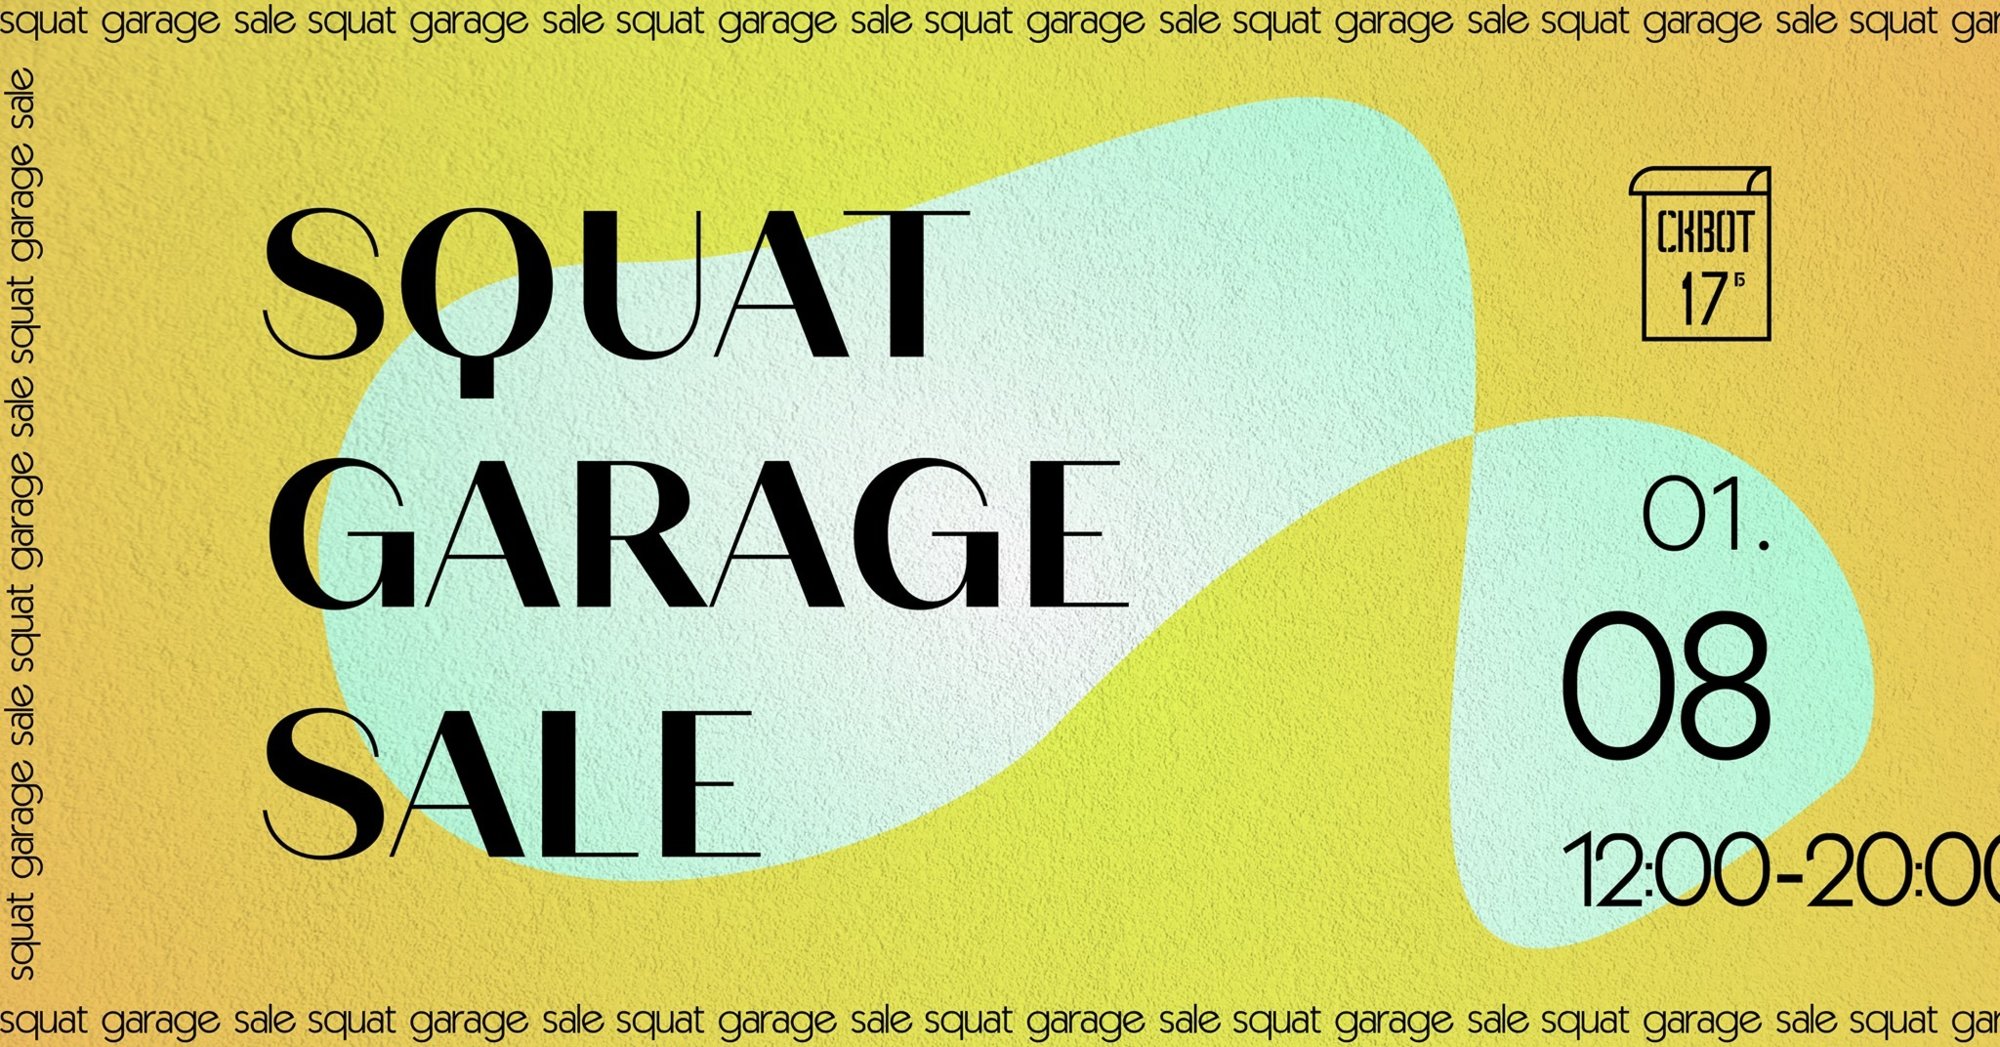 Squat Garage Sale